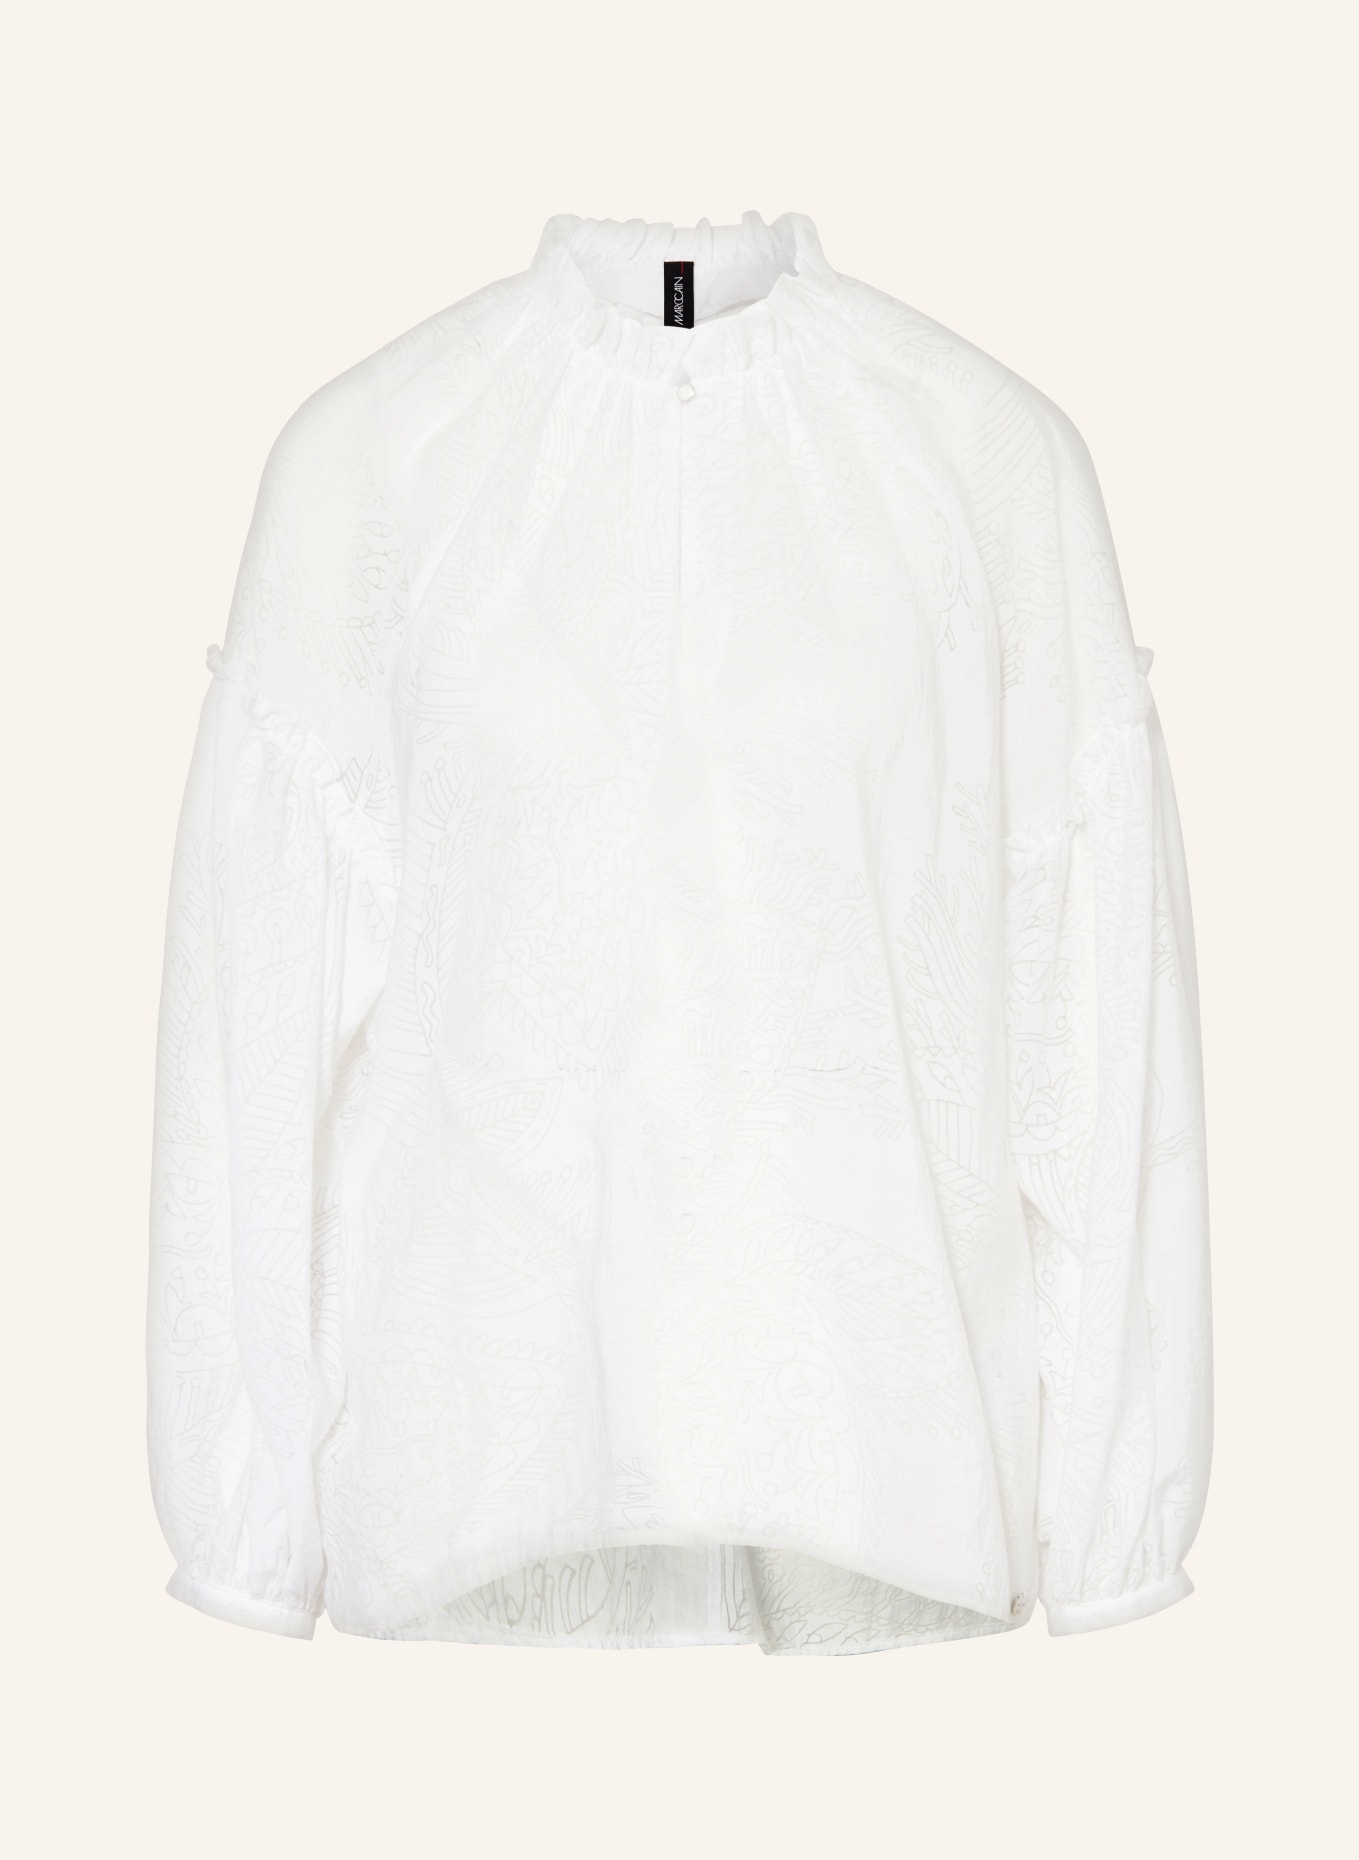 MARC CAIN Blusenshirt, Farbe: 100 WHITE (Bild 1)